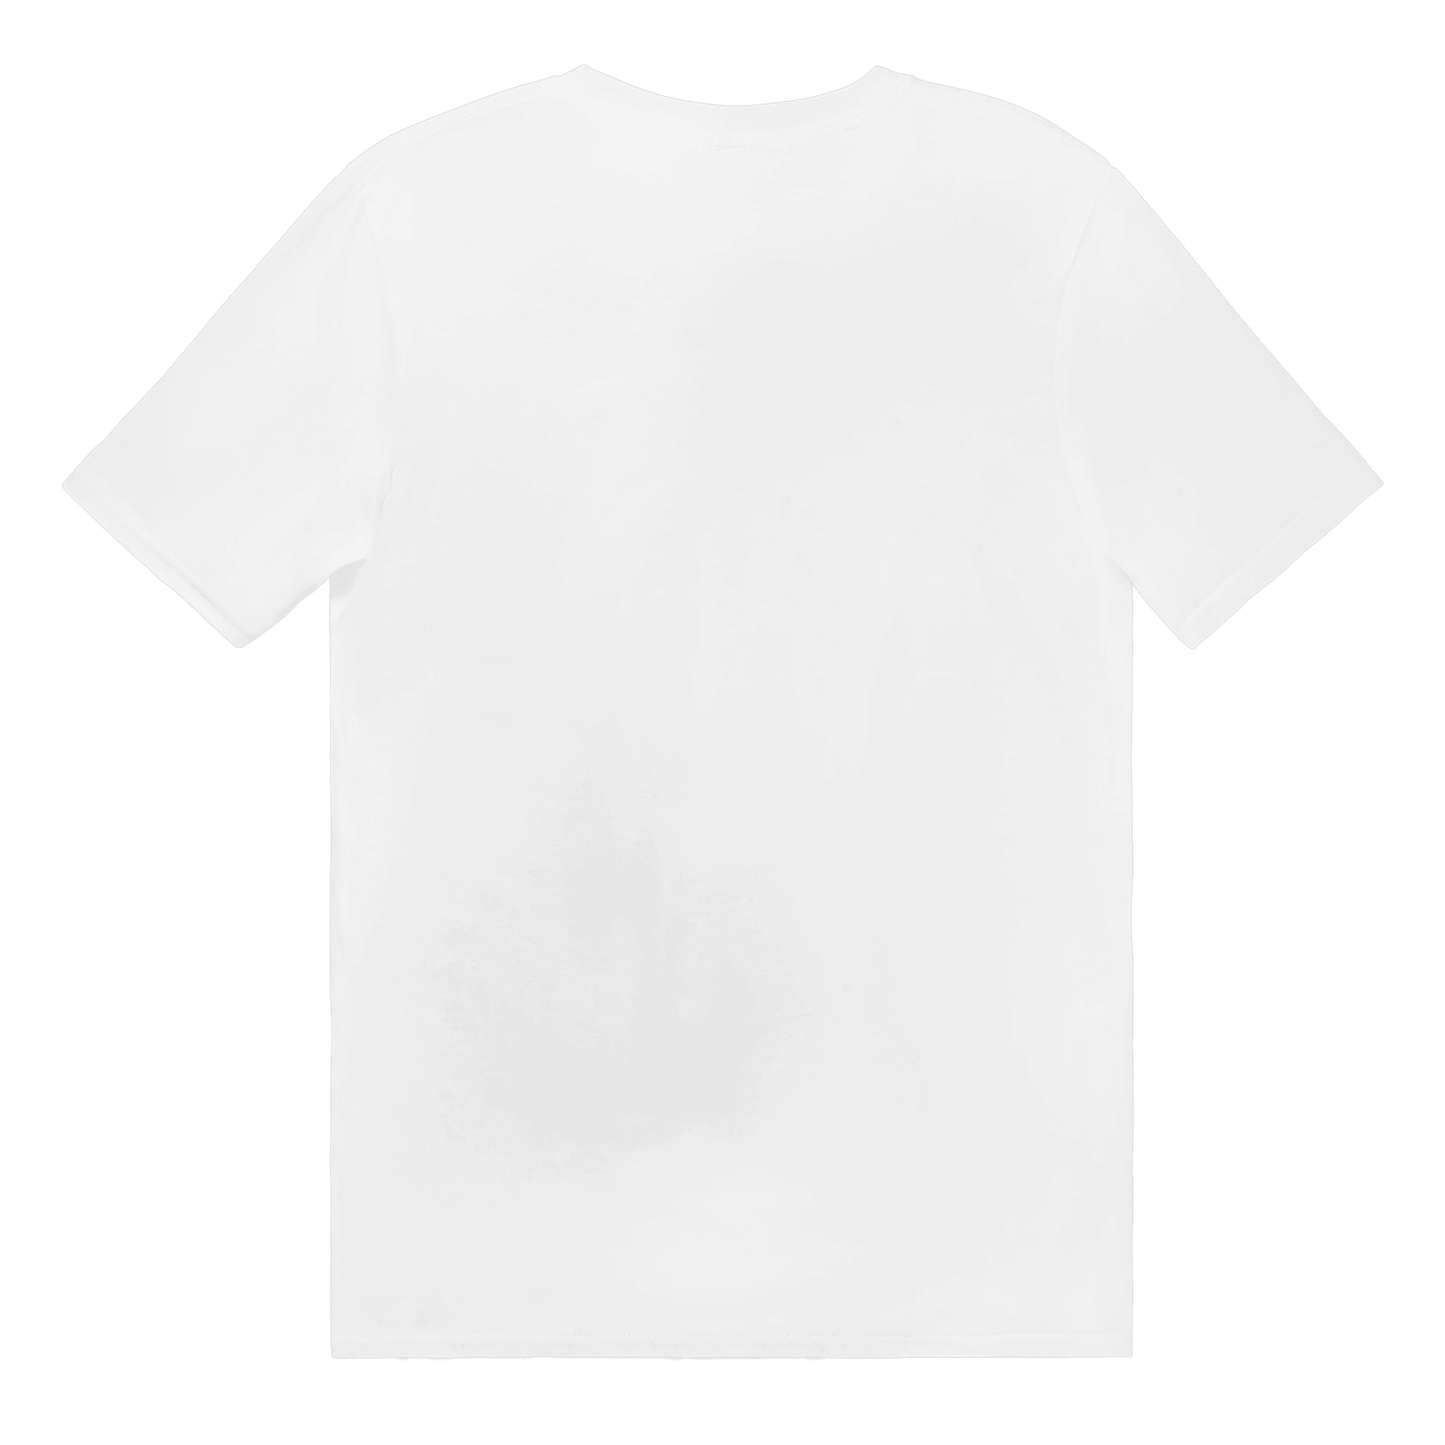 Långhylsa Fan Club - T-shirt 